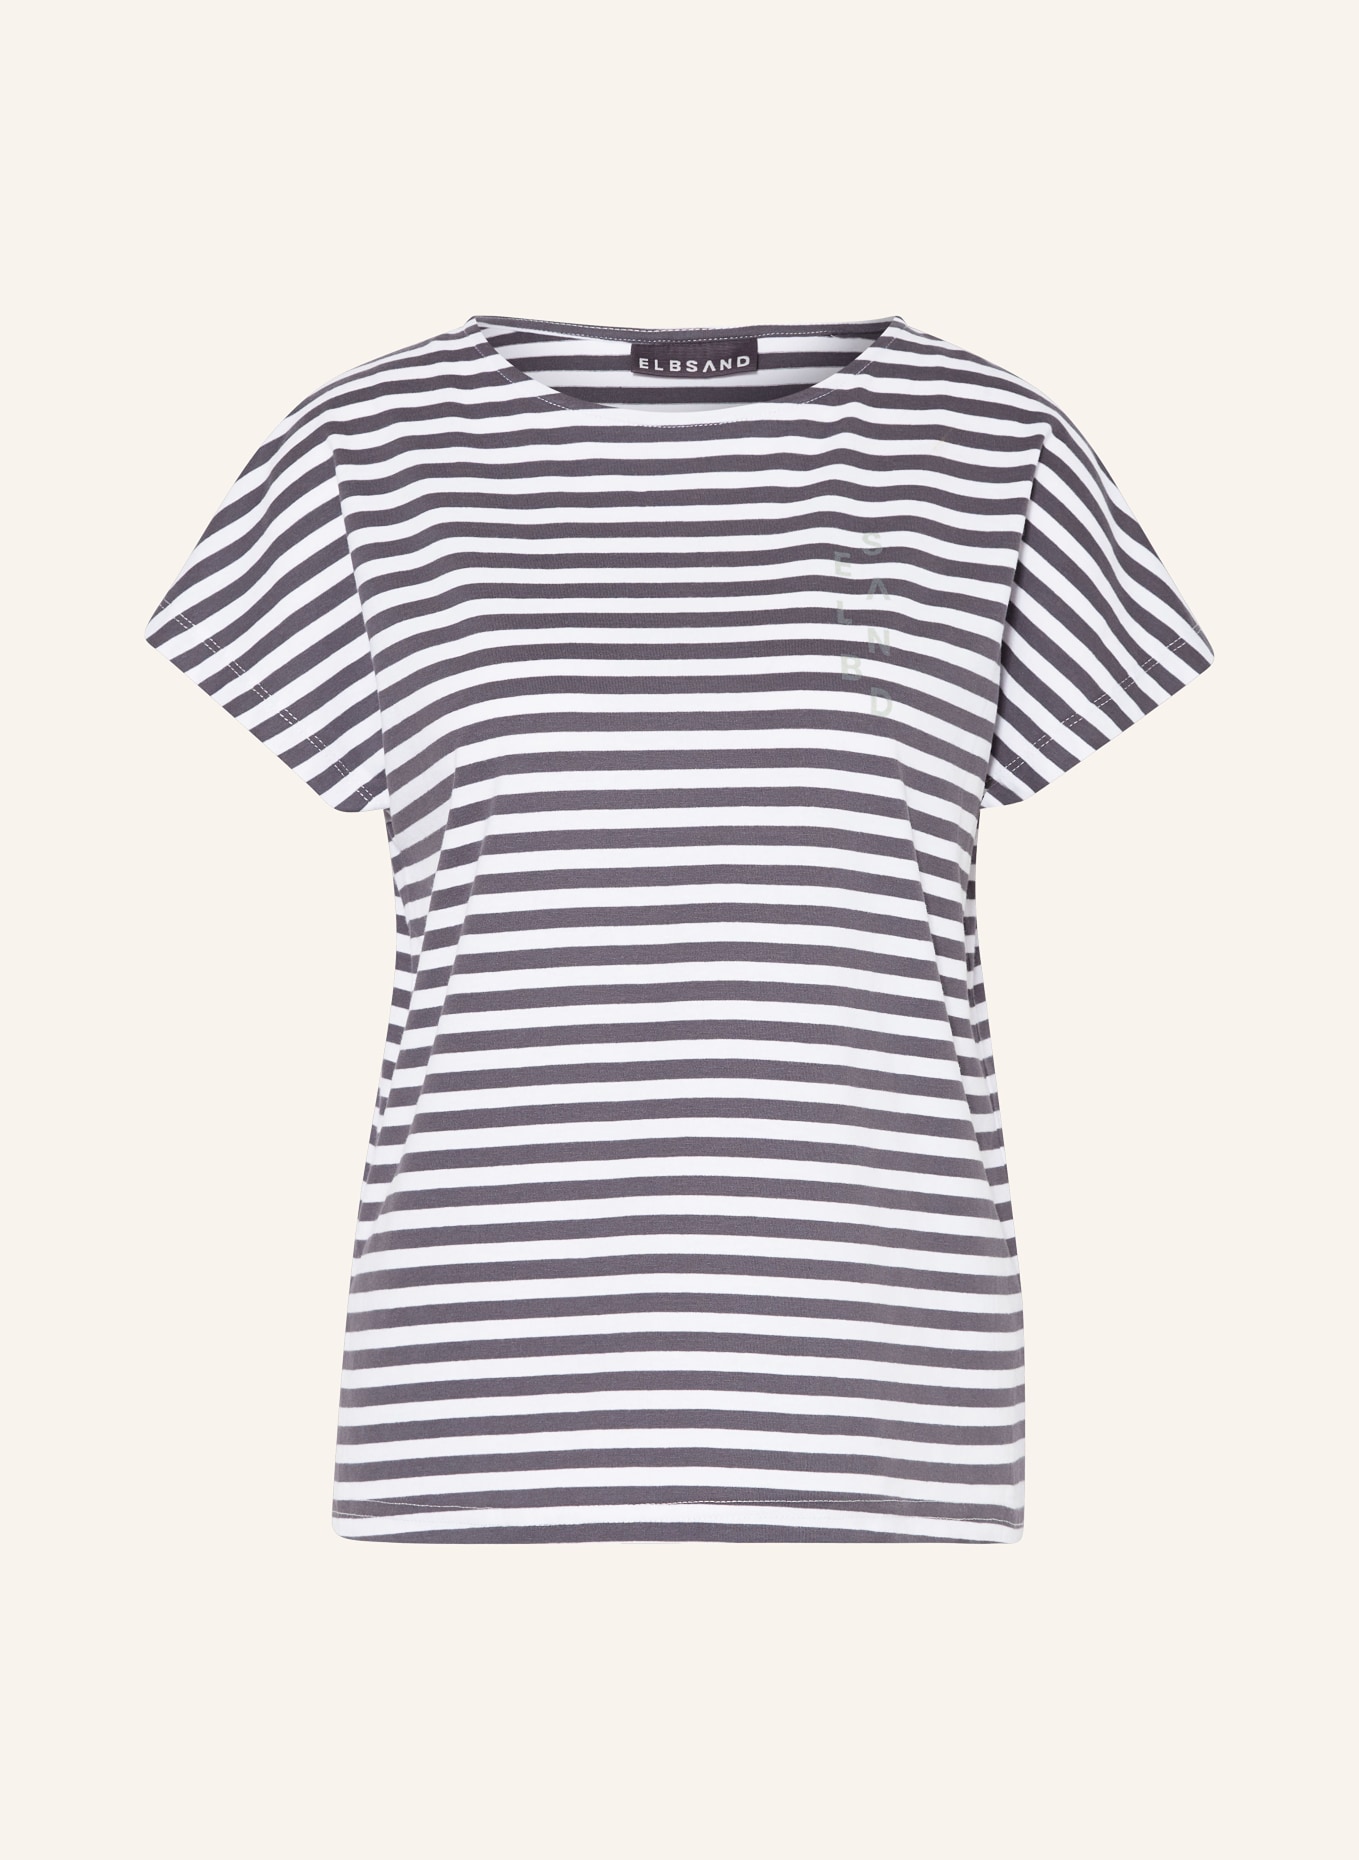 ELBSAND T-shirt SELMA, Color: DARK GRAY/ WHITE (Image 1)